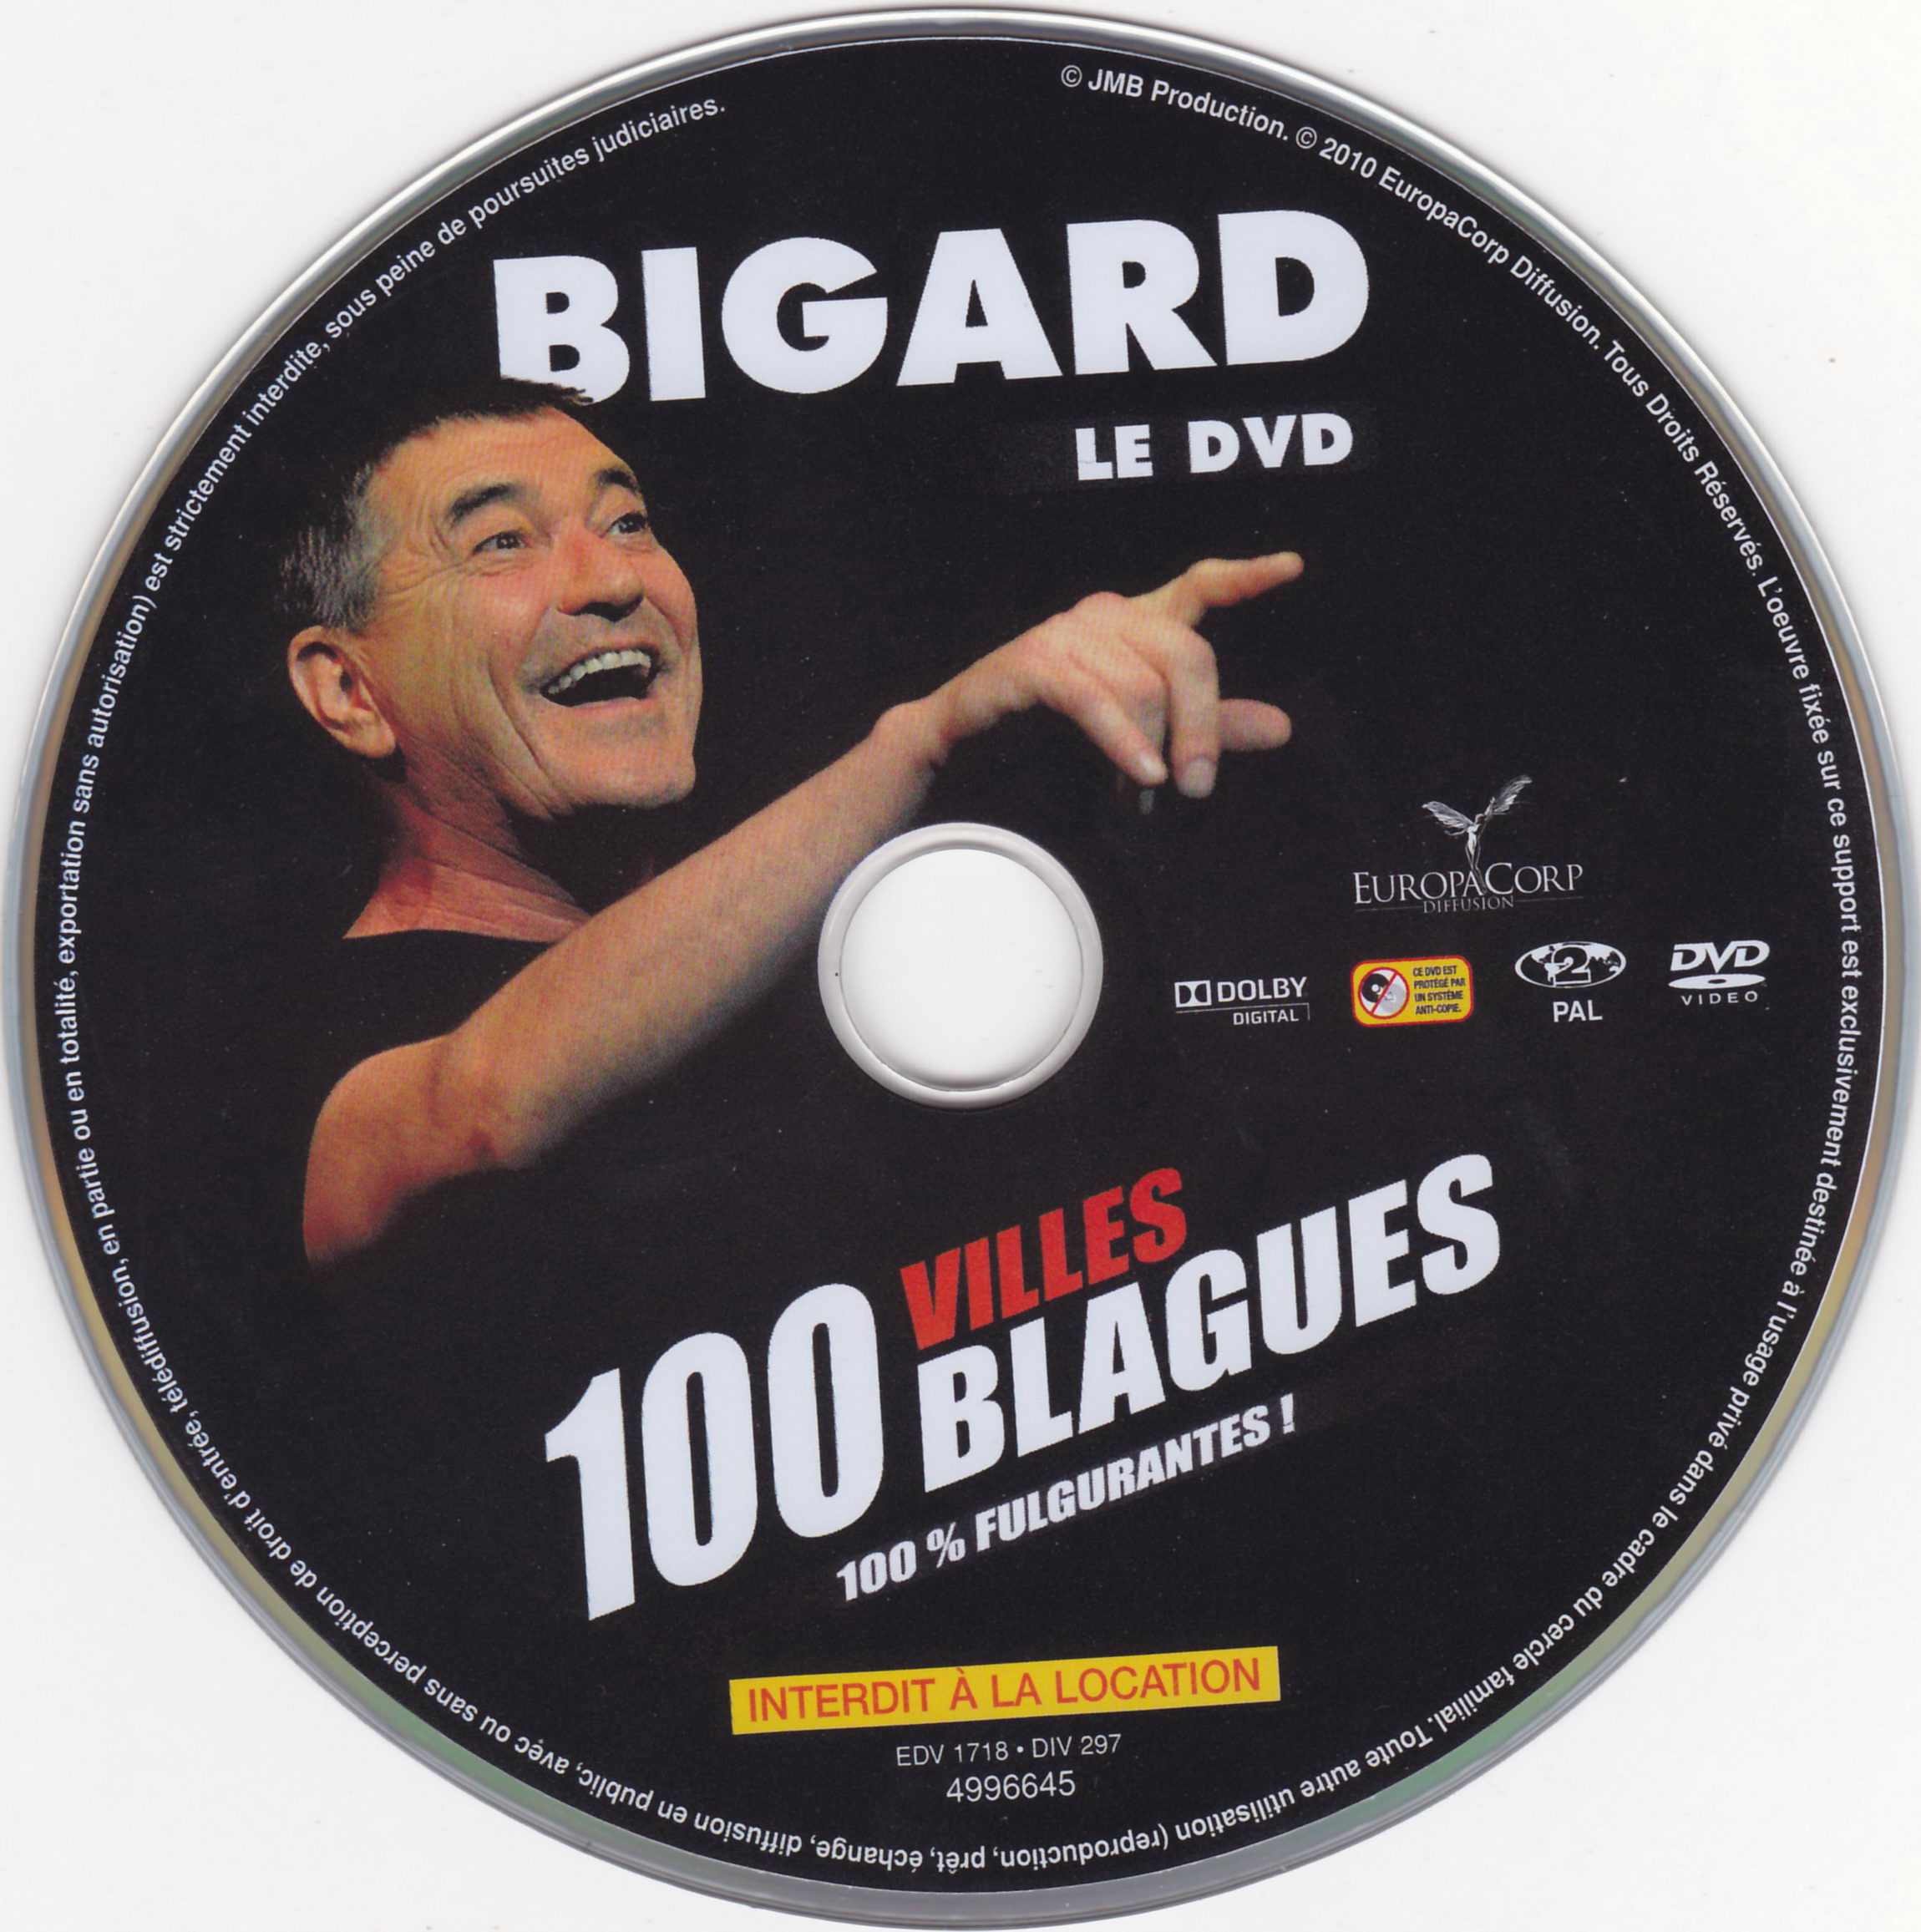 Bigard 100 blagues 100 villes